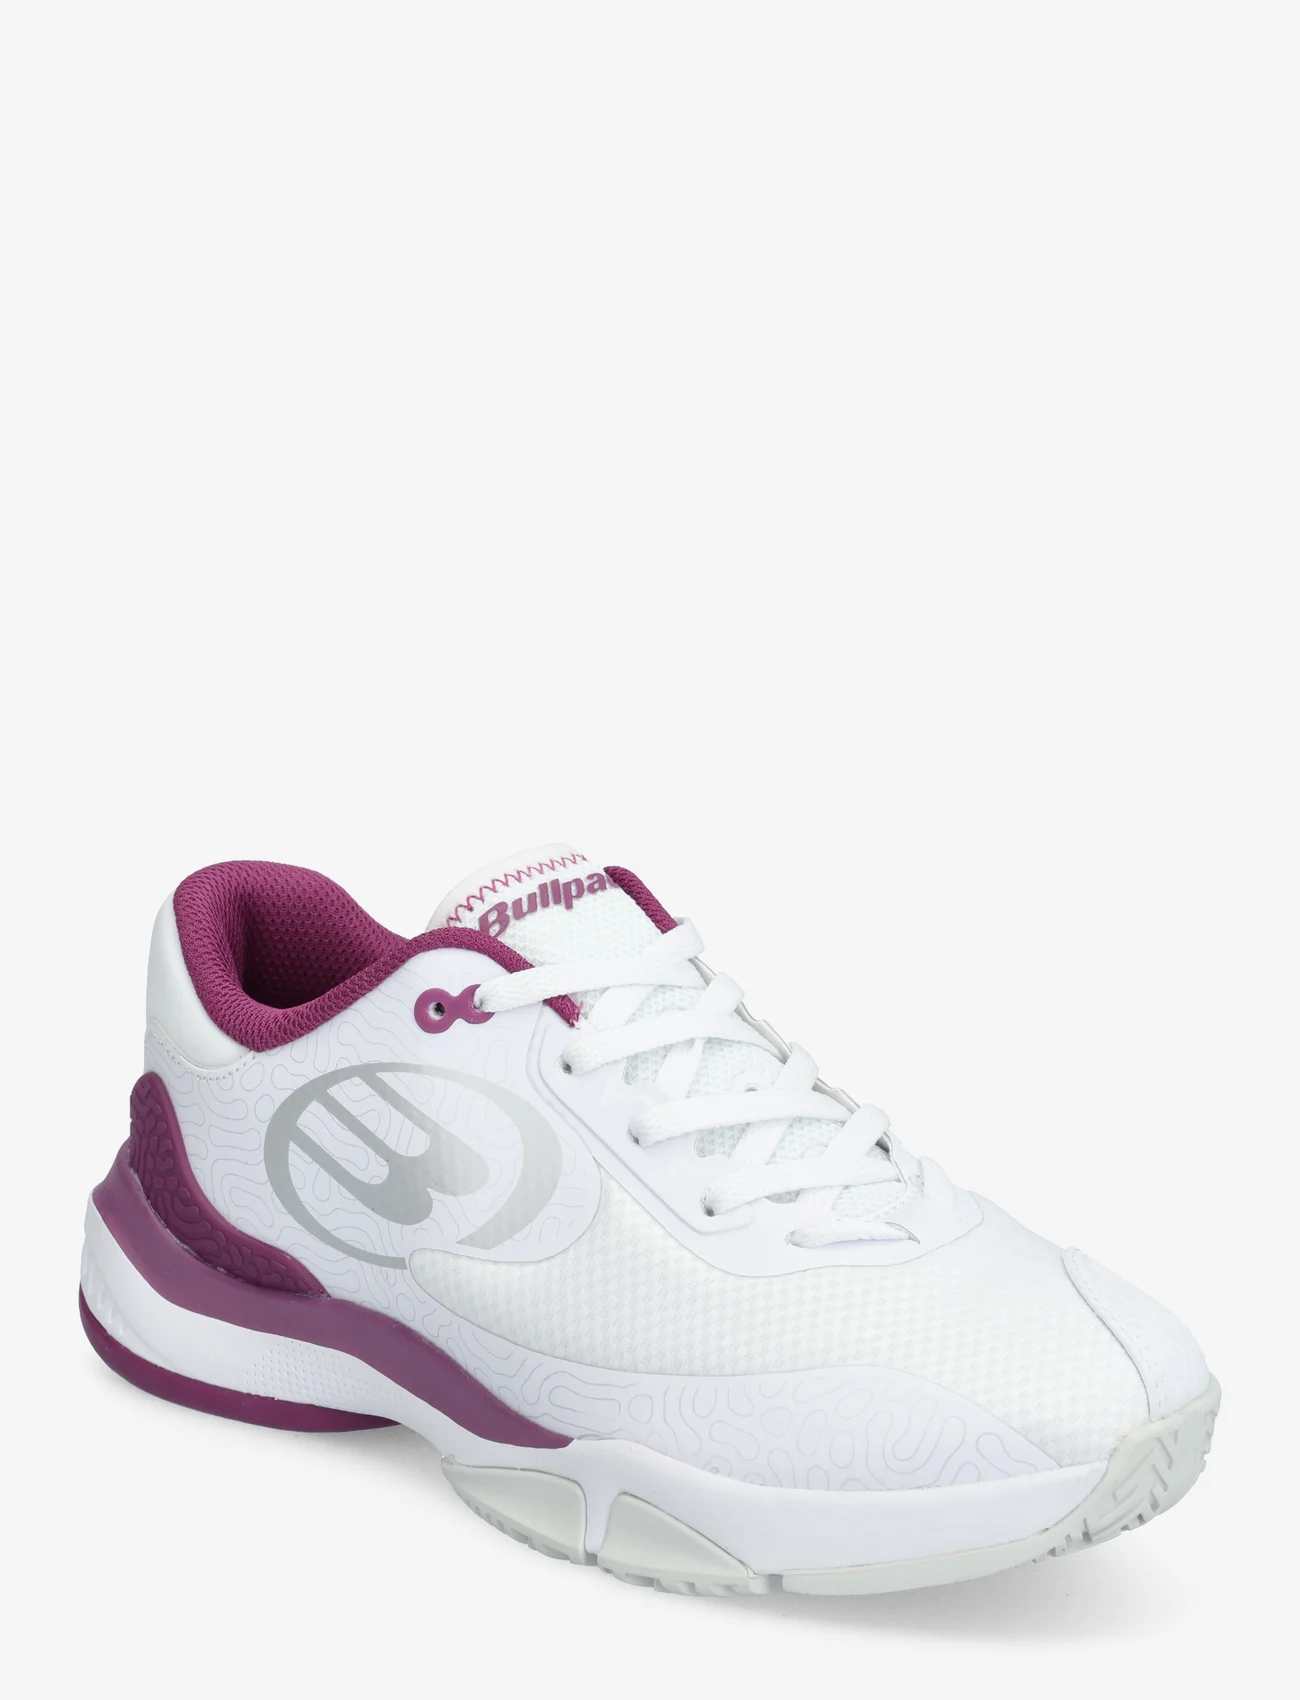 Bullpadel - FLOW HYBRID FLY - racketsports shoes - white/violet - 0